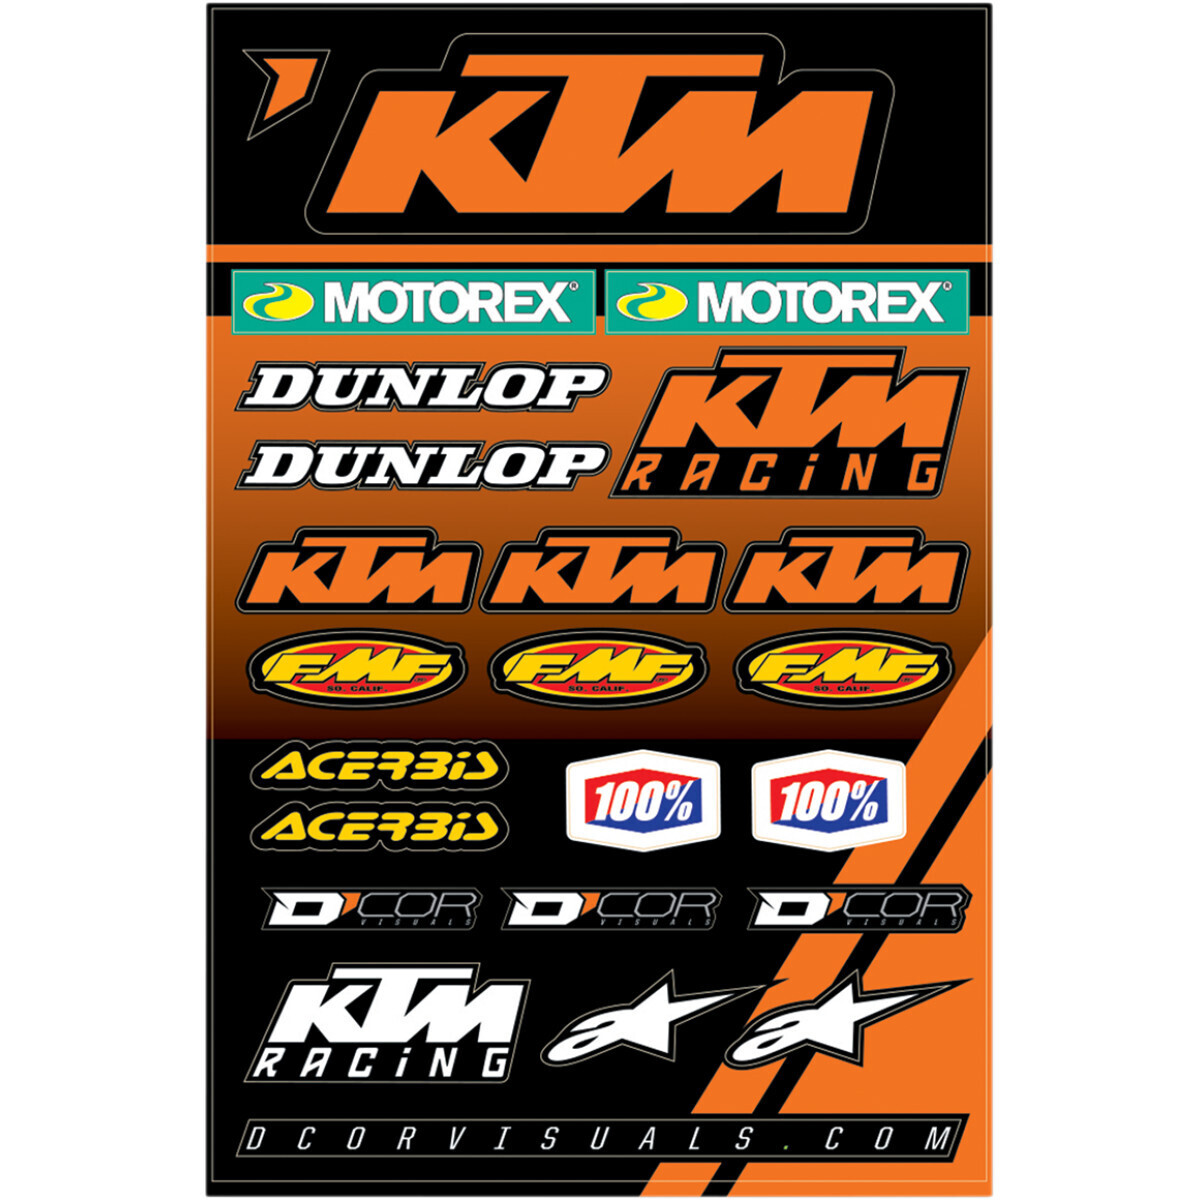 D'COR VISUALS
DECAL SHEET KTM RACING